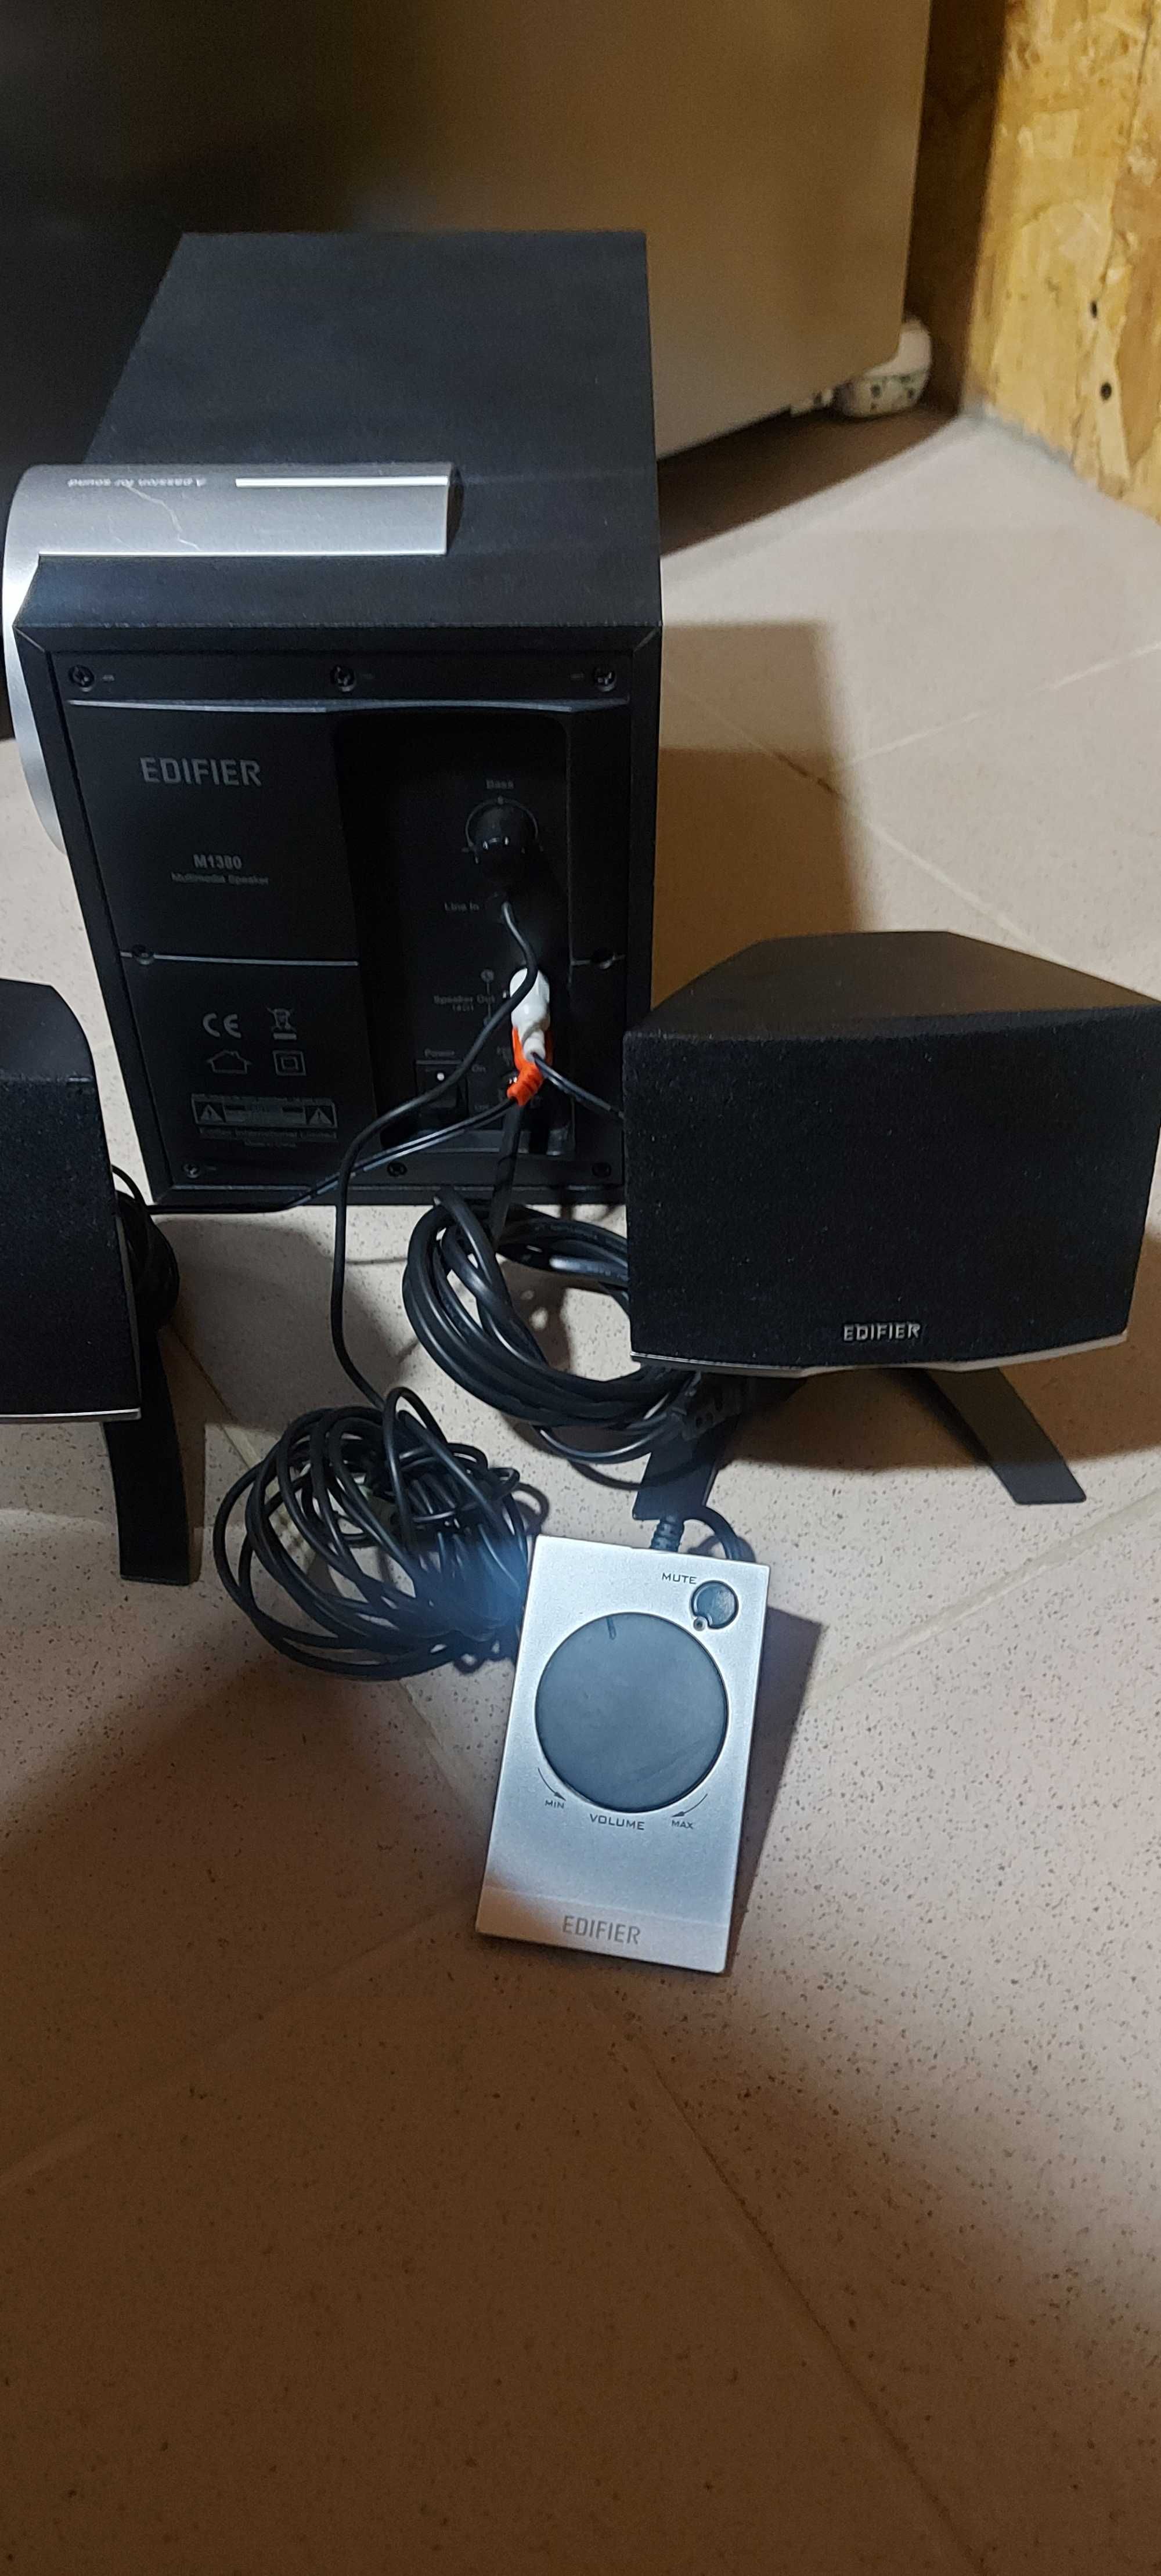 Edifier M1380 Speaker System - 2.1 аудио система